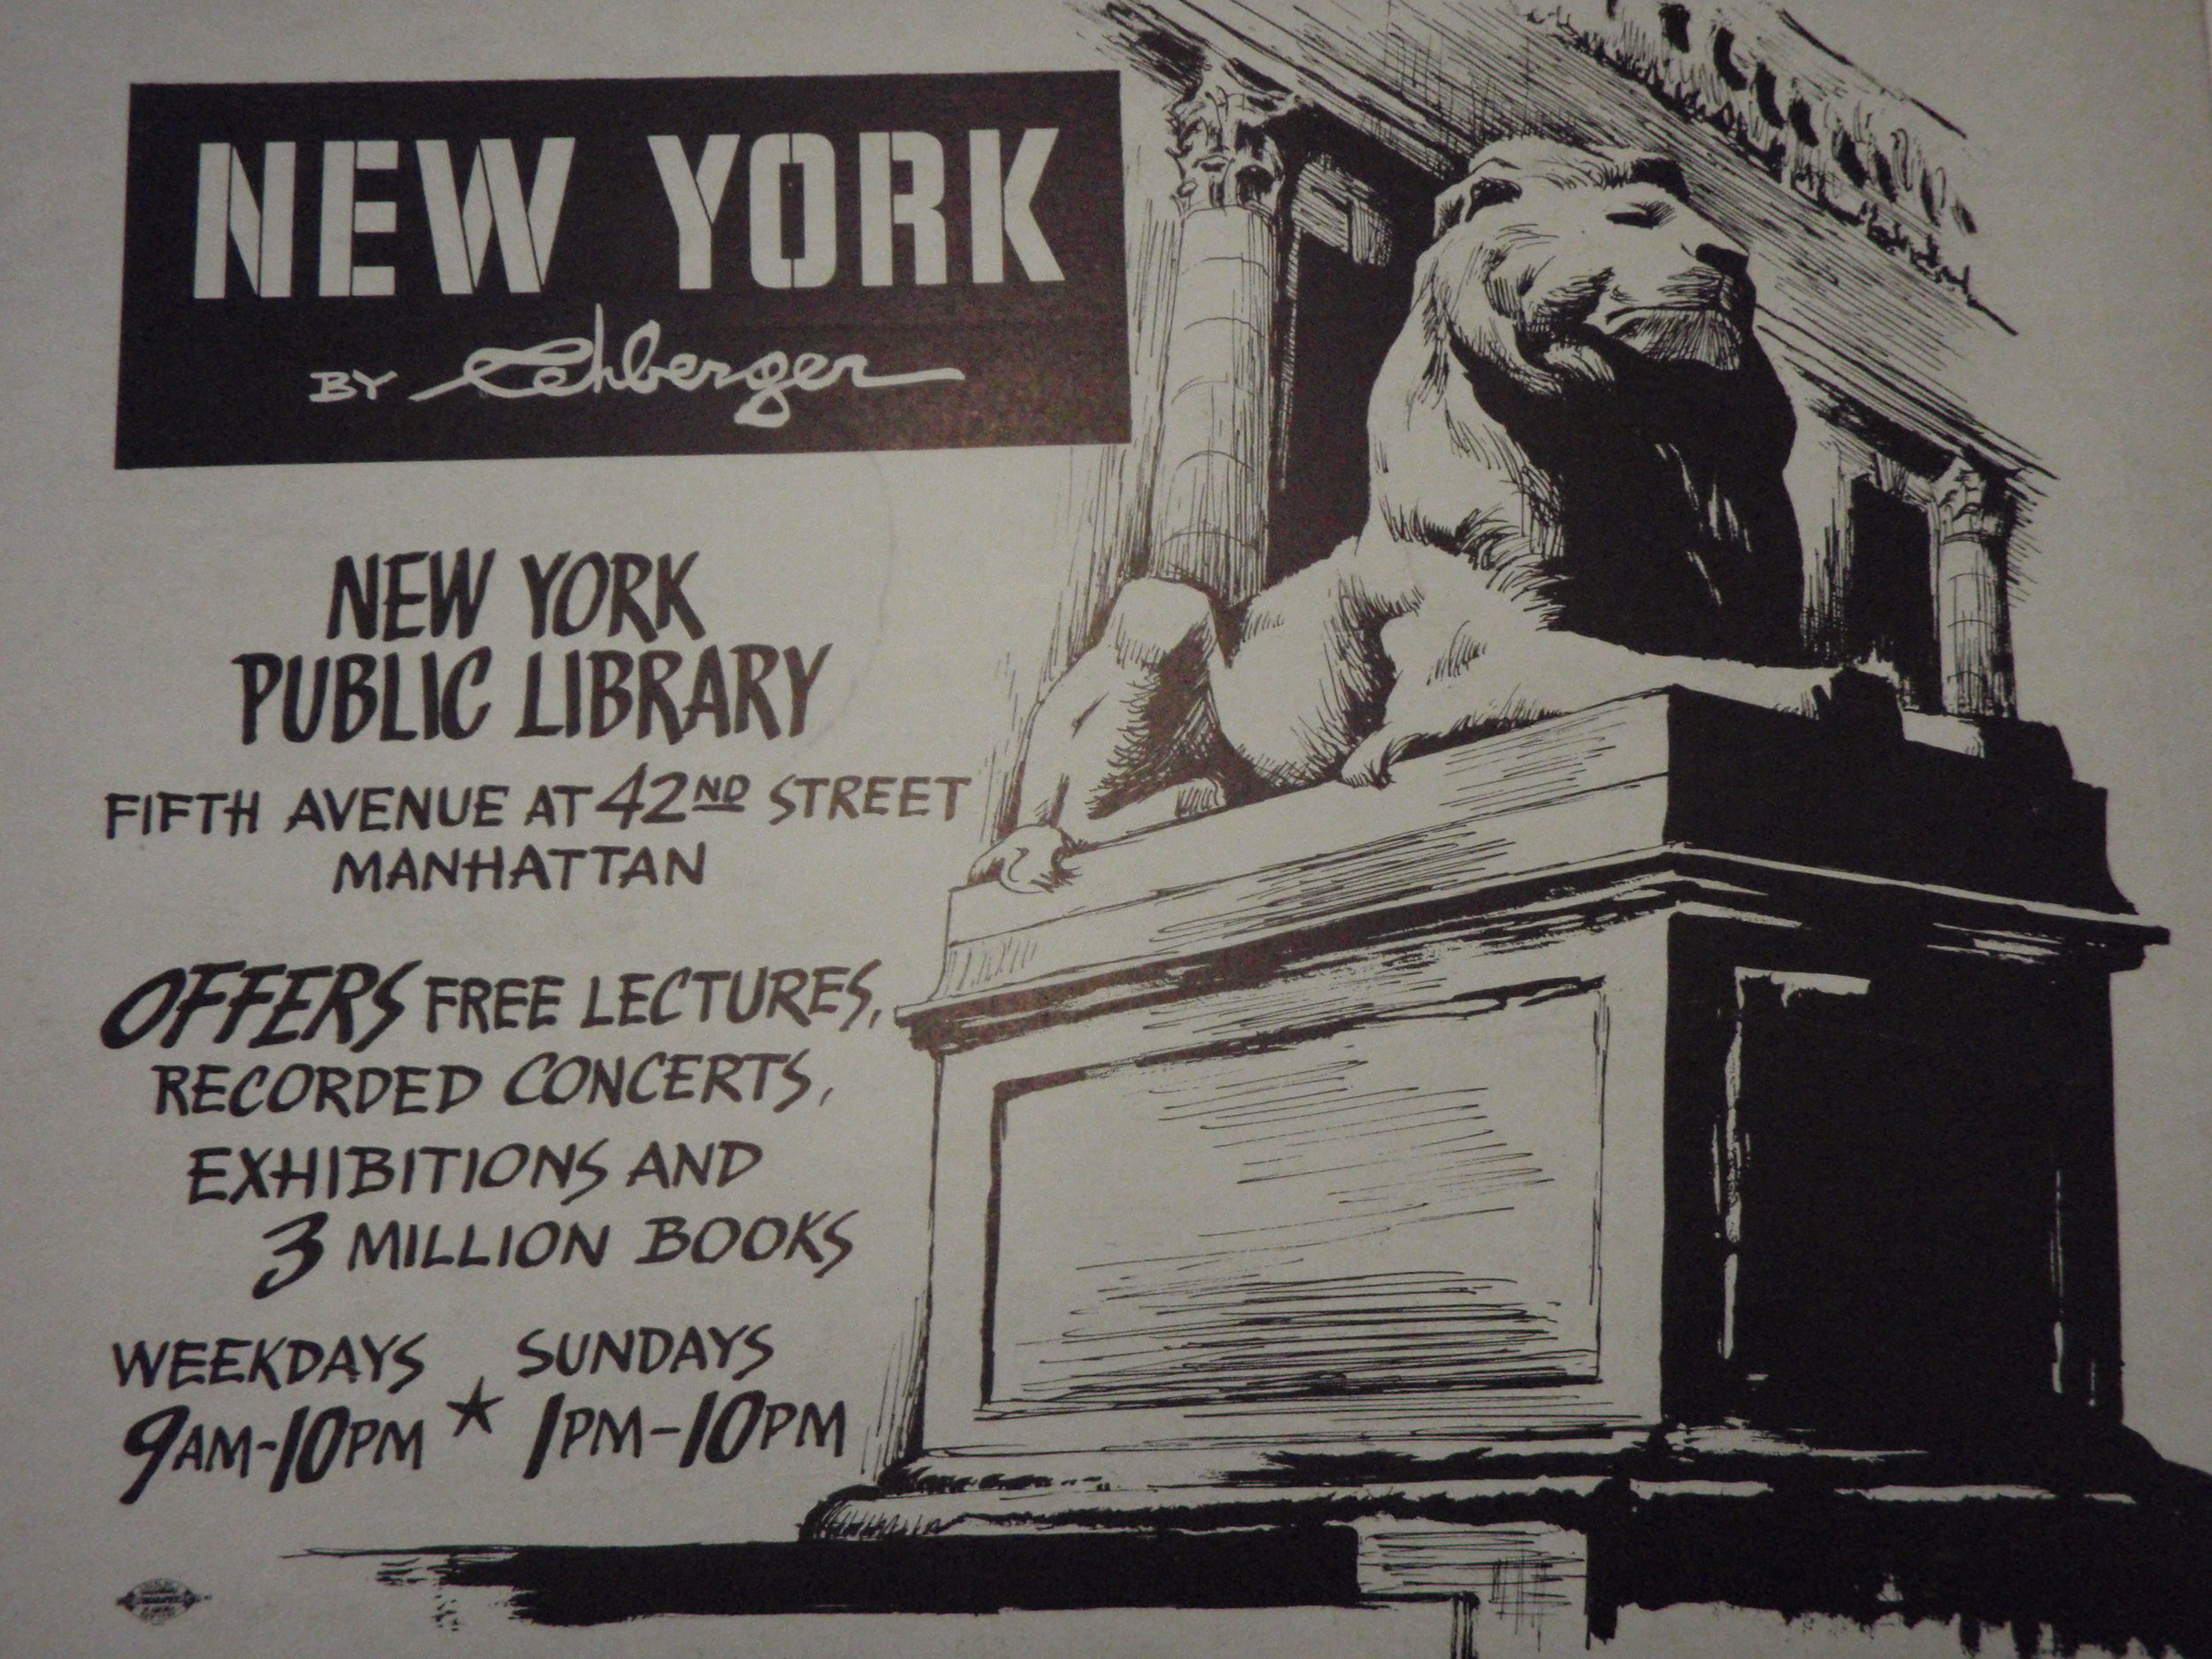 NEW YORK by REHBERGER  1948 #12   Subway Poster  - New York Subways Advertising Co..JPG